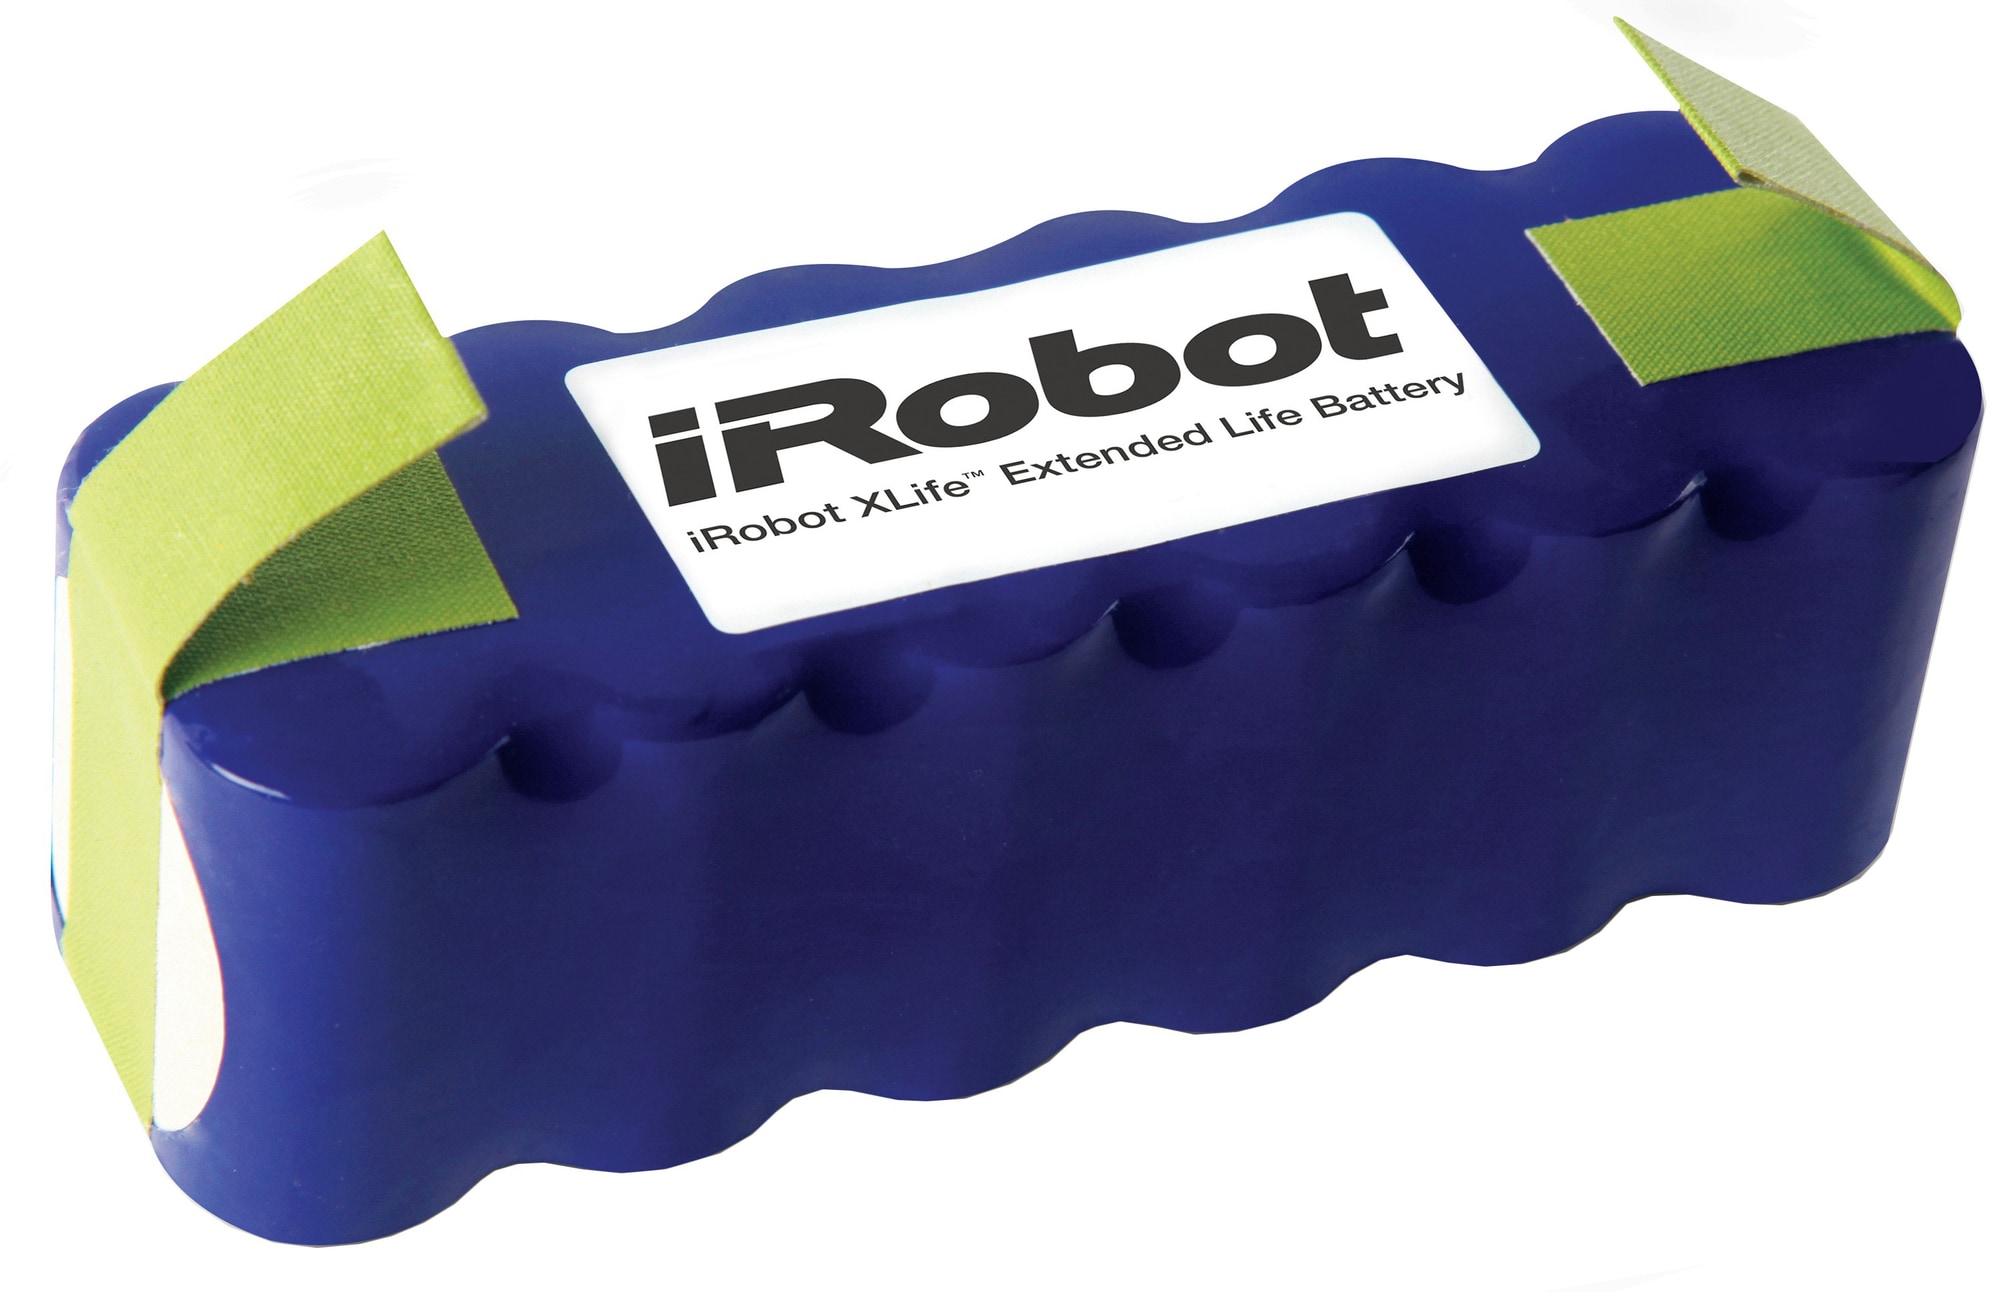 iRobot Roomba XLife batteri - Tilbehør til robotstøvsugere - Elgiganten